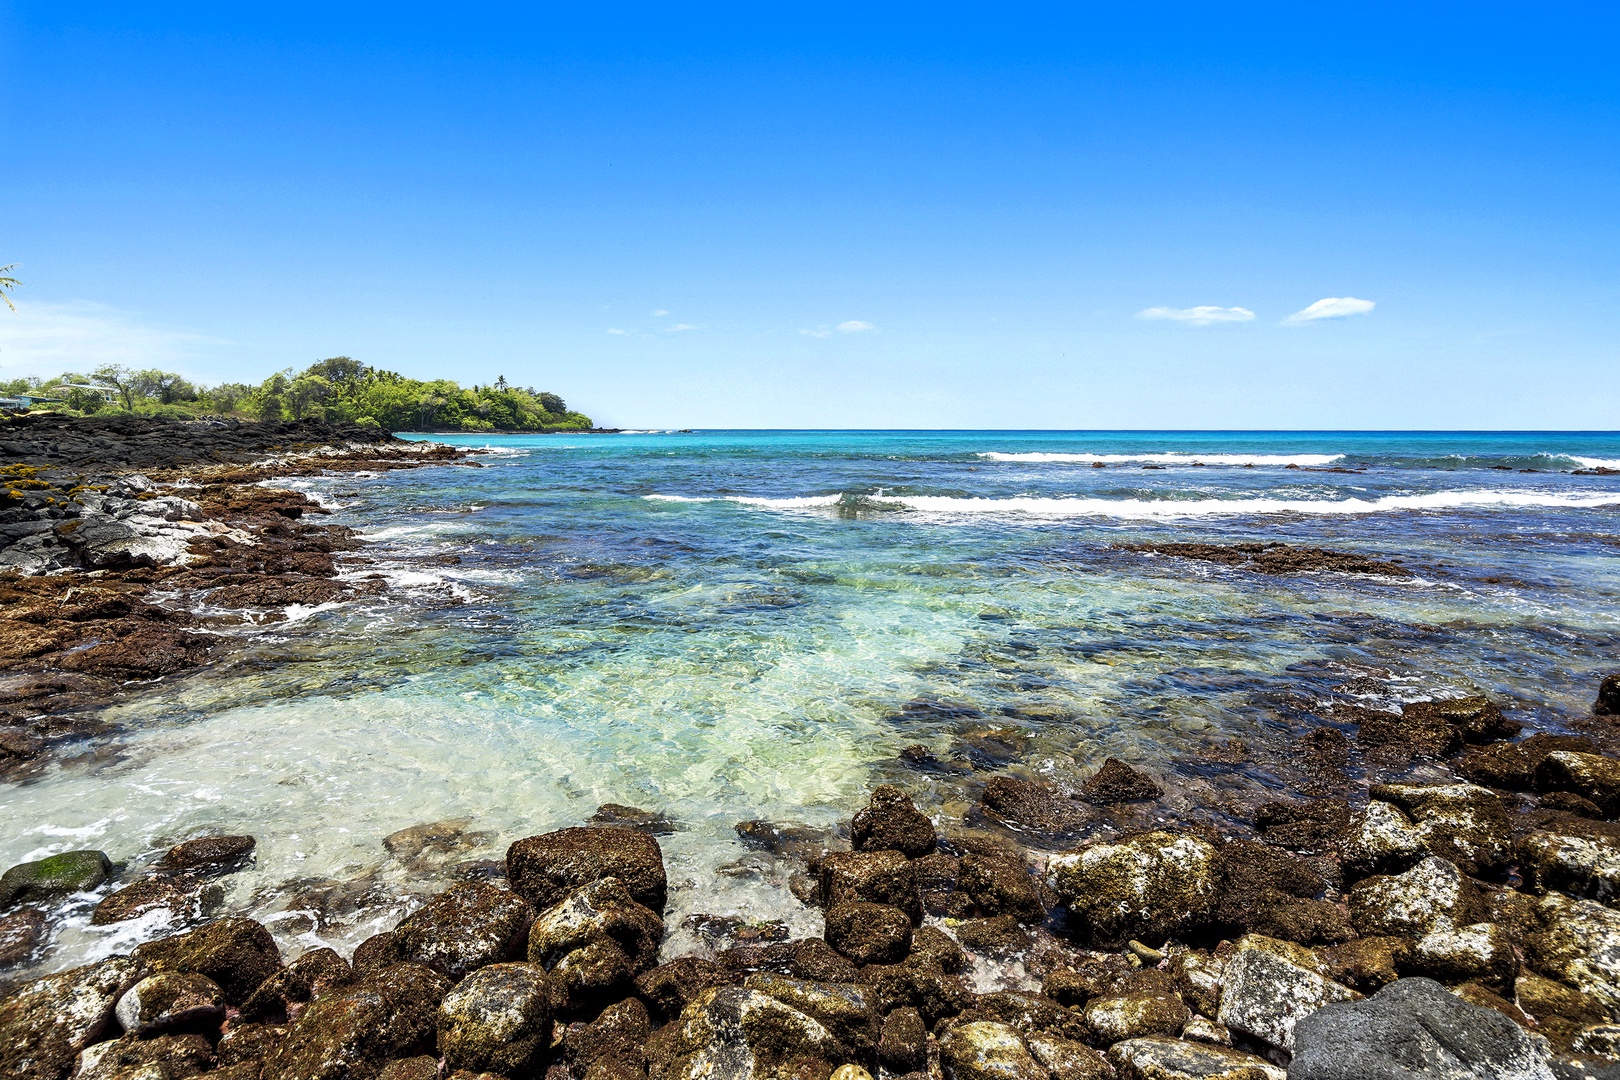 Kailua Kona Vacation Rentals, Kona's Shangri La - Crystal clear water as far as the eye can see!